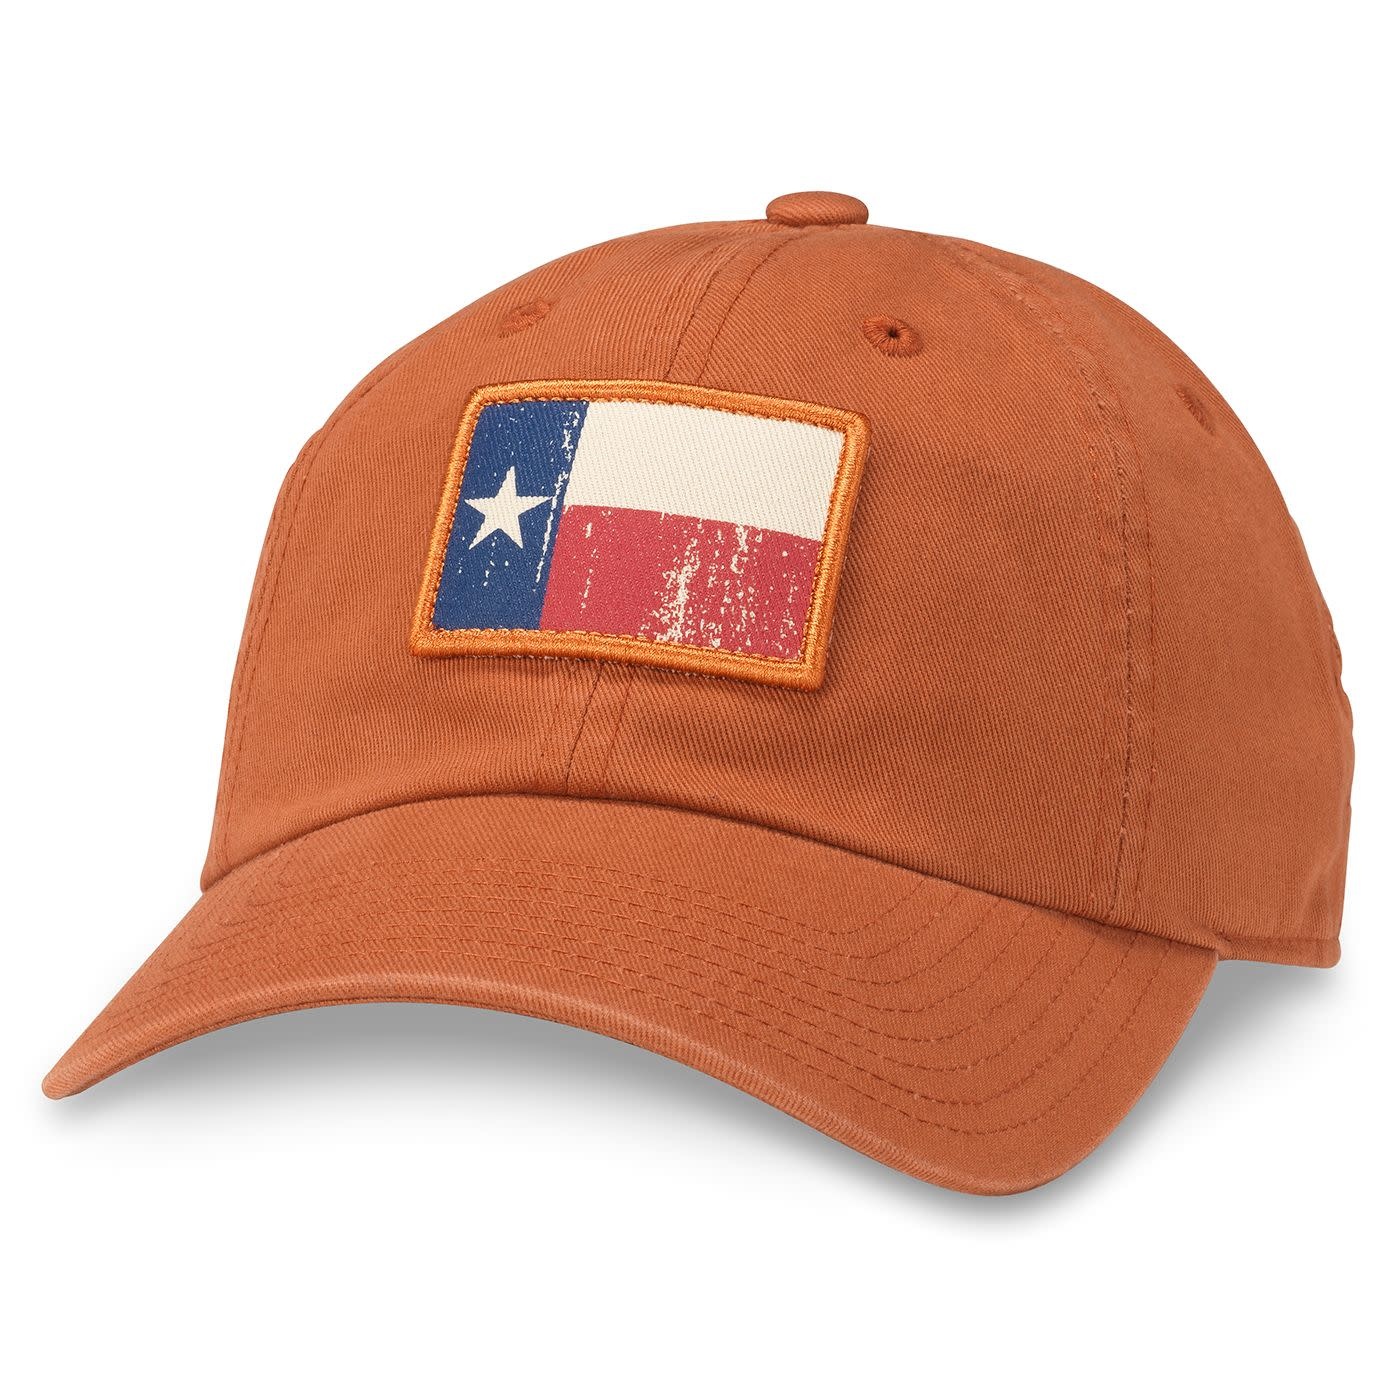 Texas Lonestar Patch Hat Baseball Cap Orange The Periwinkle Shoppe